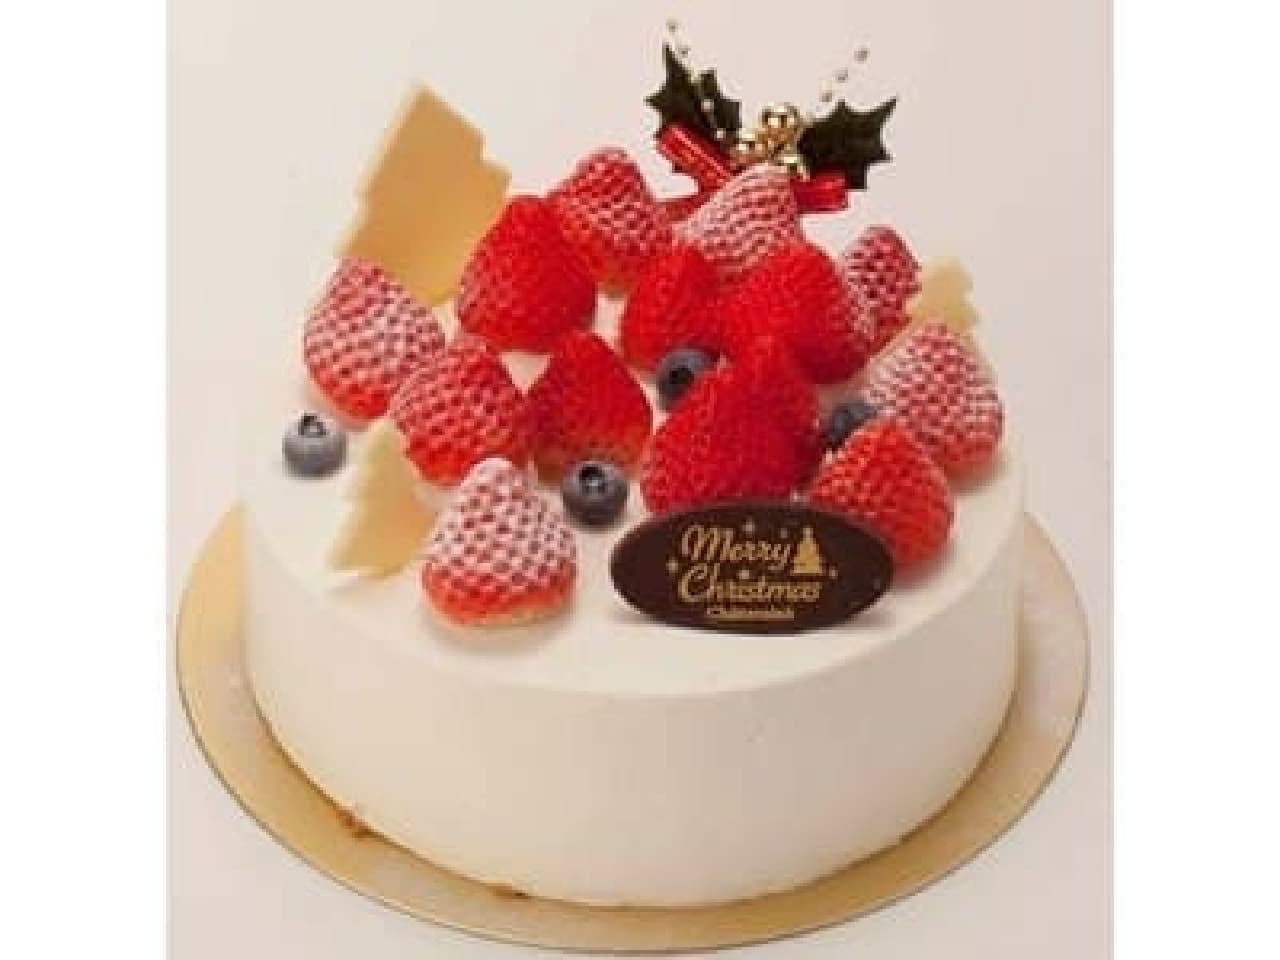 "Xmas strawberry decoration" with gorgeous strawberries